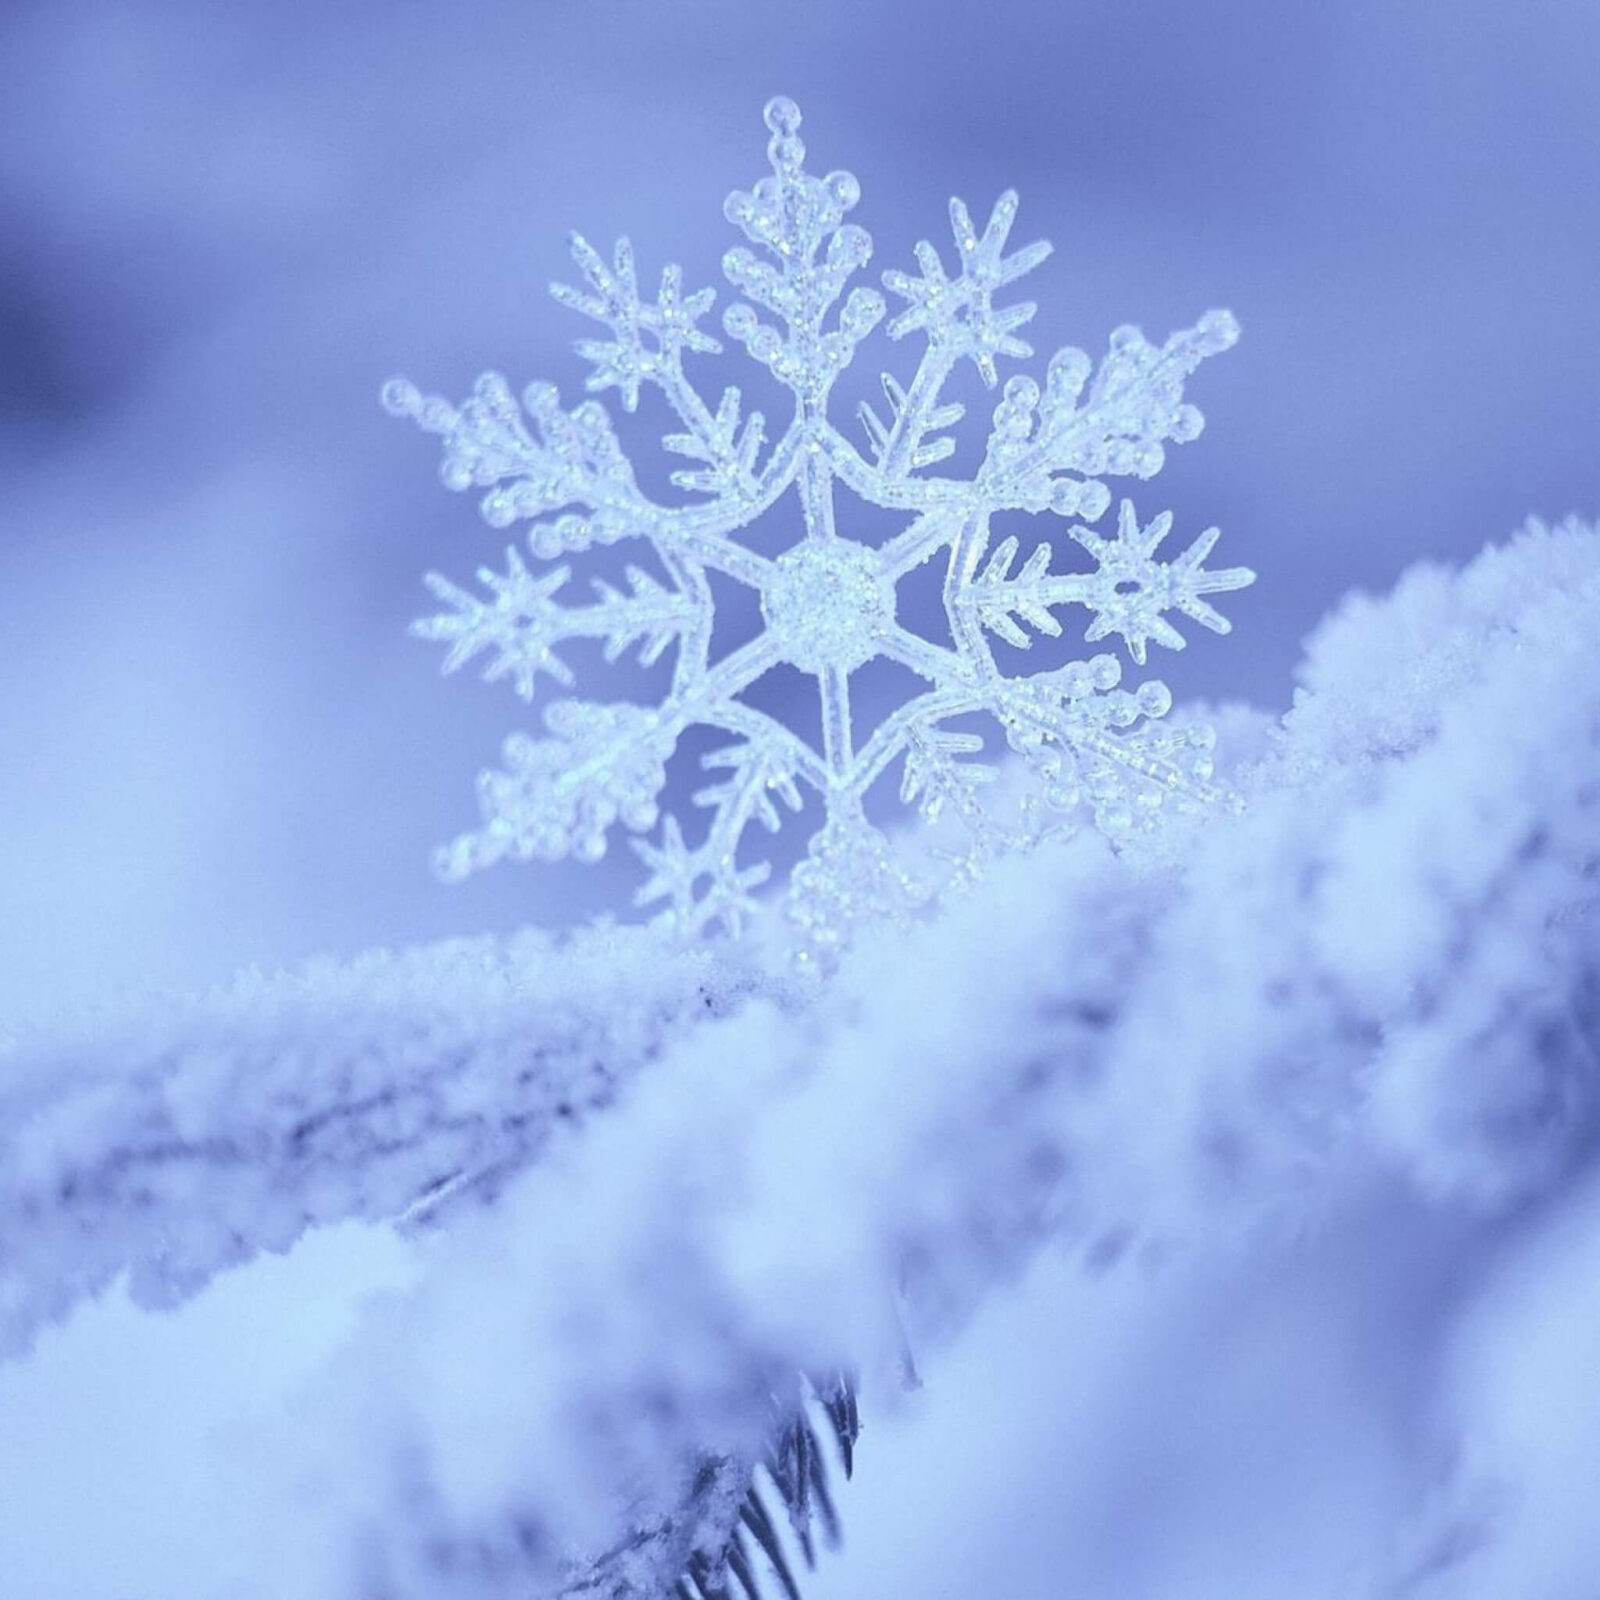 snow_snowflake_winter_form_pattern_49405_2048x2048